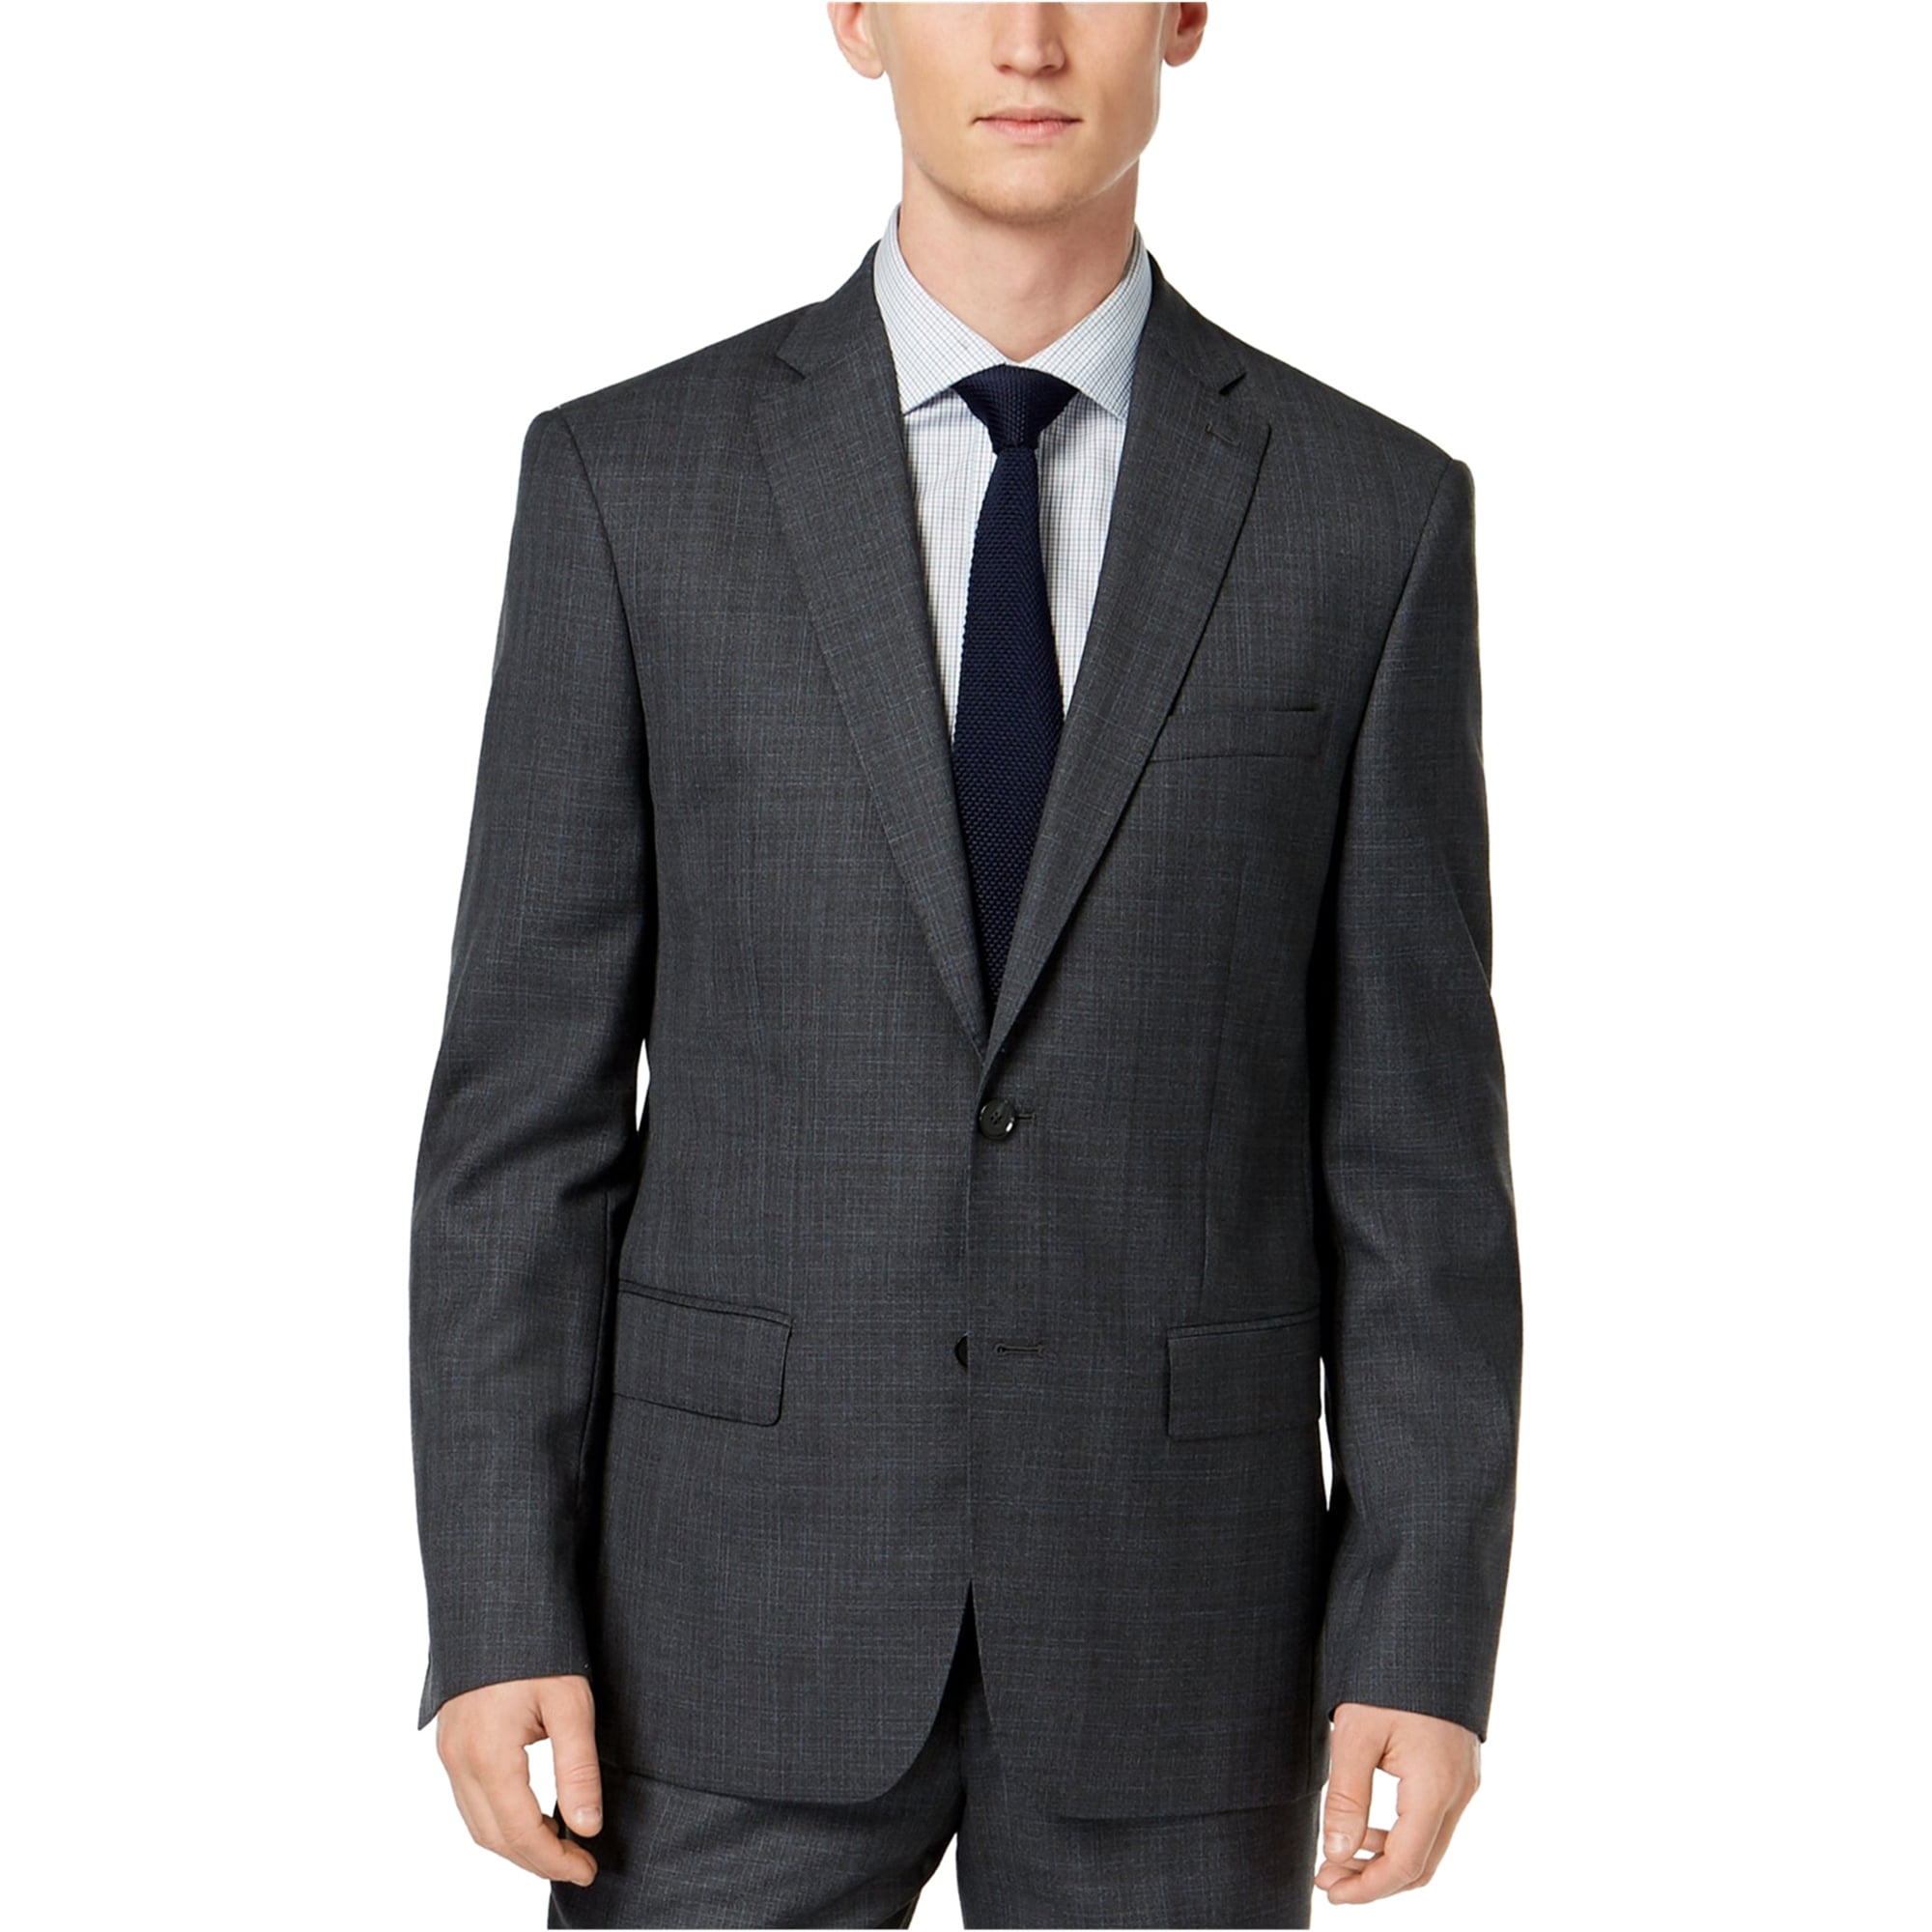 Men Dress Suit DKNY Slim Fit 2 Piece 100% Wool 2 Button Mini Check 12Y1060 Gray 